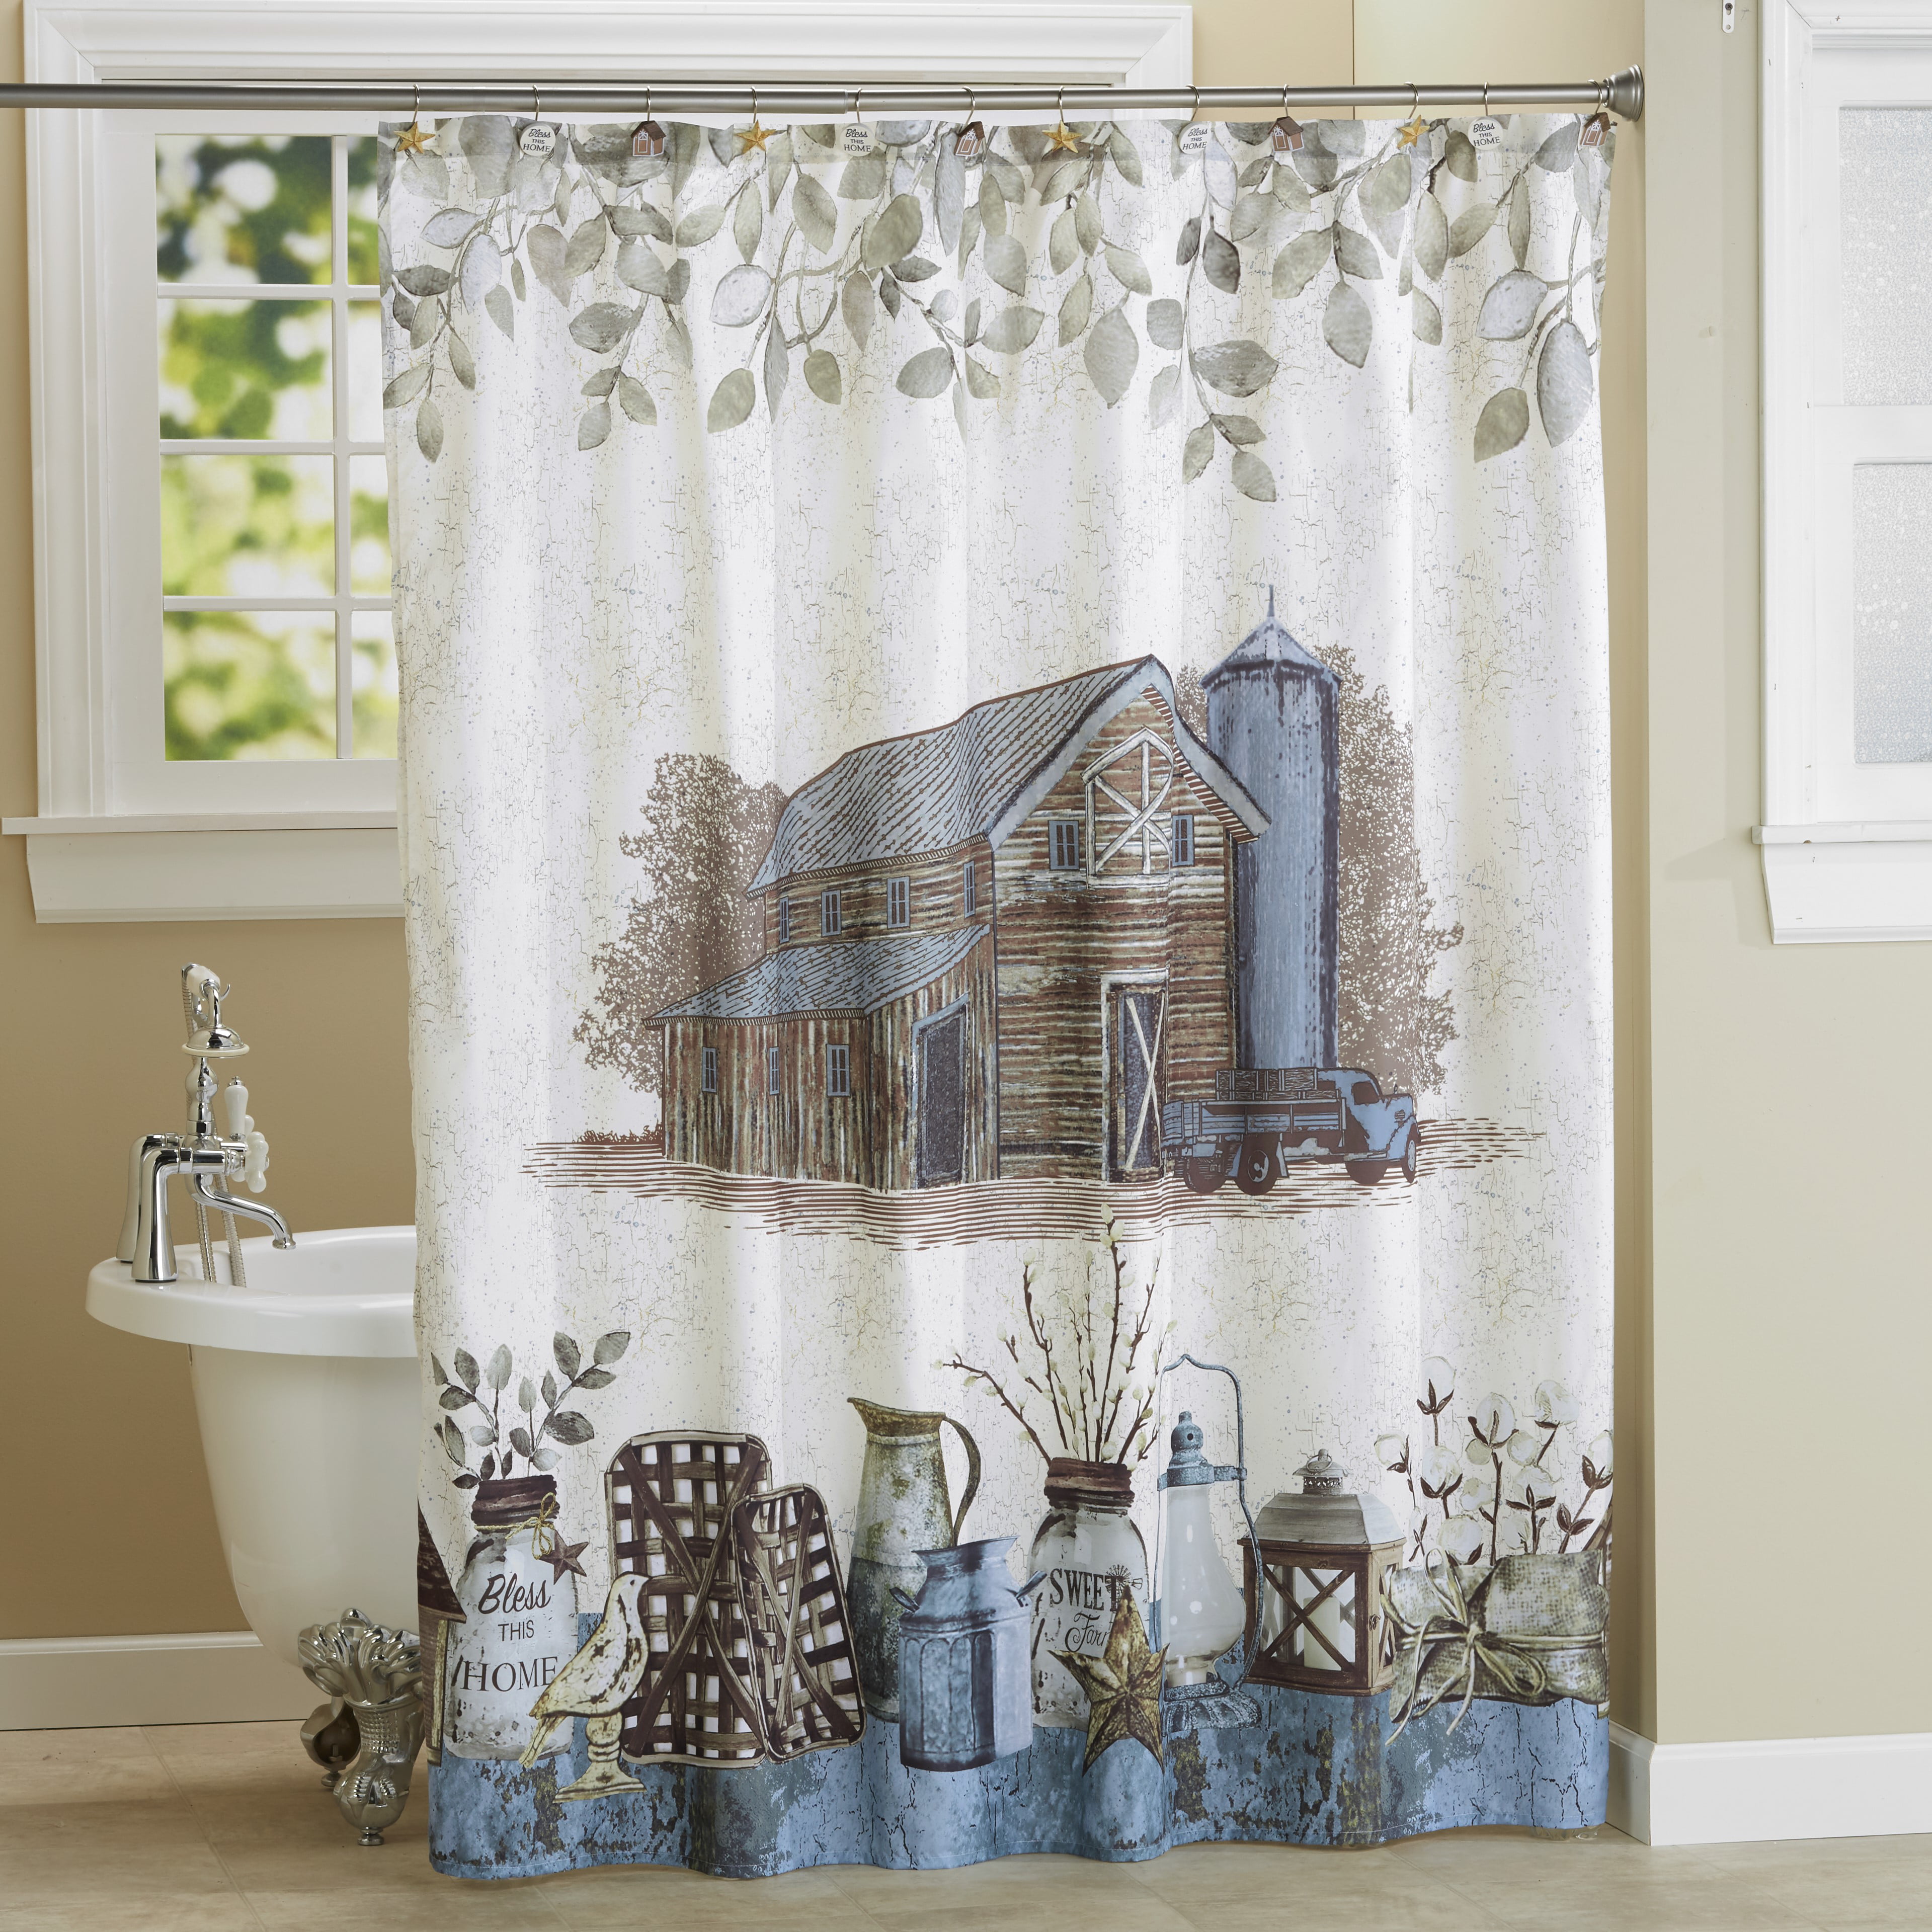 Barn Country Life Rustic Hardwood Cloth Fabric Bathroom Decor Set Shower Curtain 